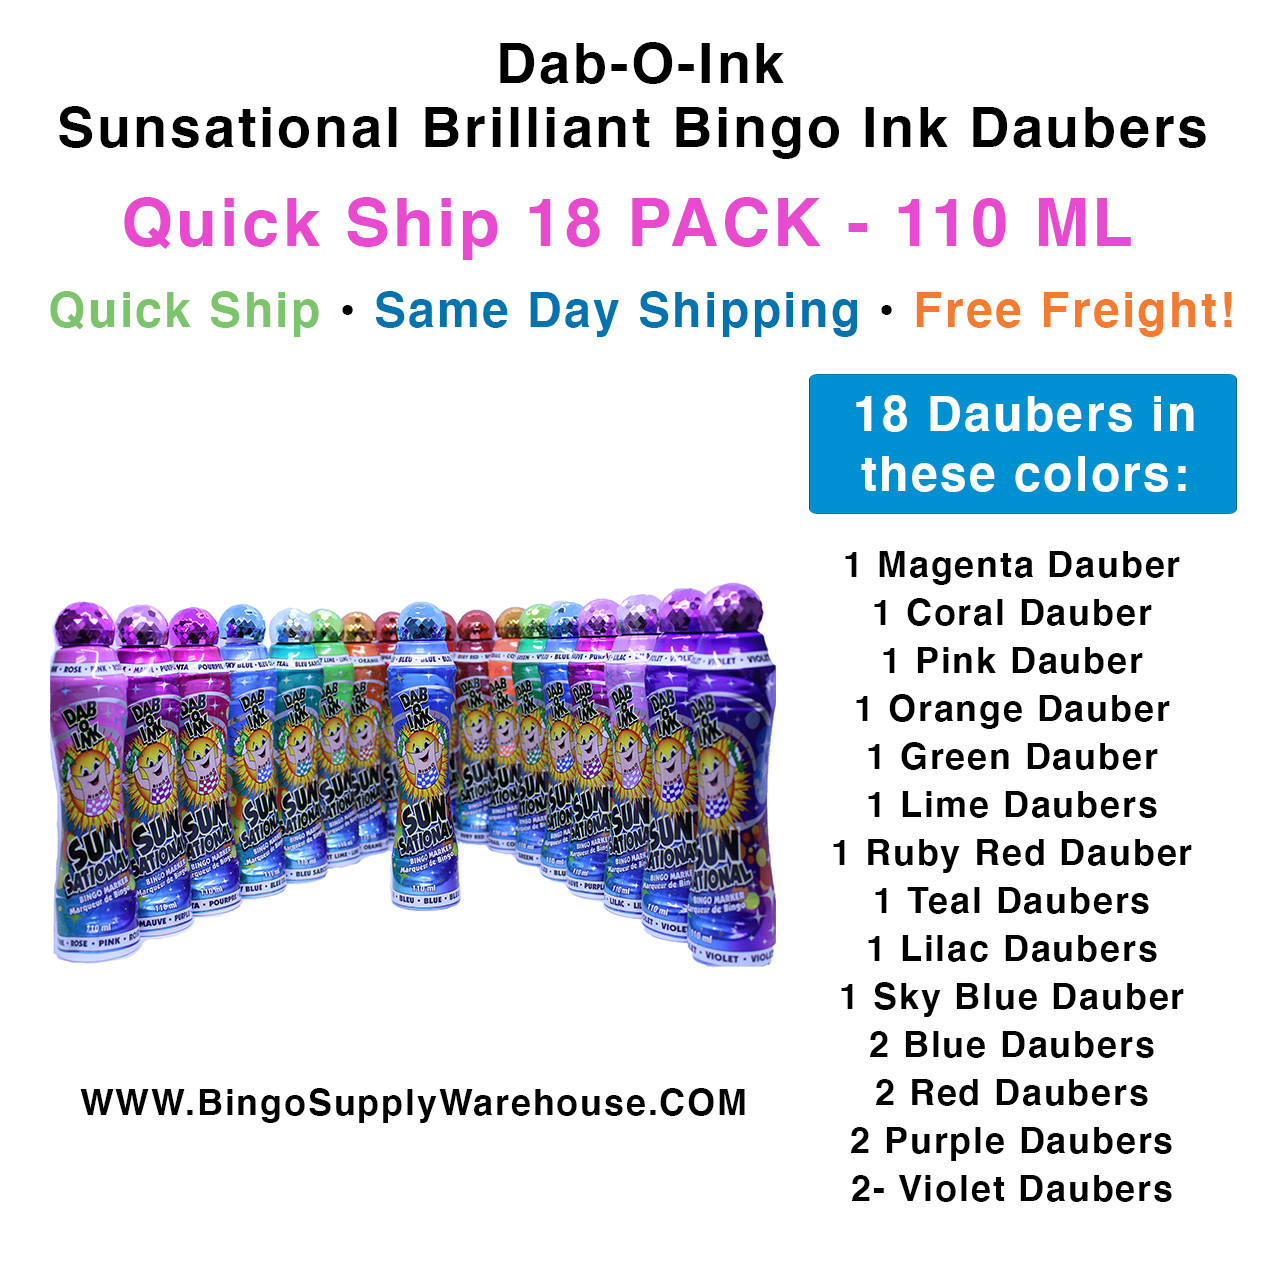 Bulk Purchase Set of 48 Dab-O-Ink 3 oz Bingo Daubers